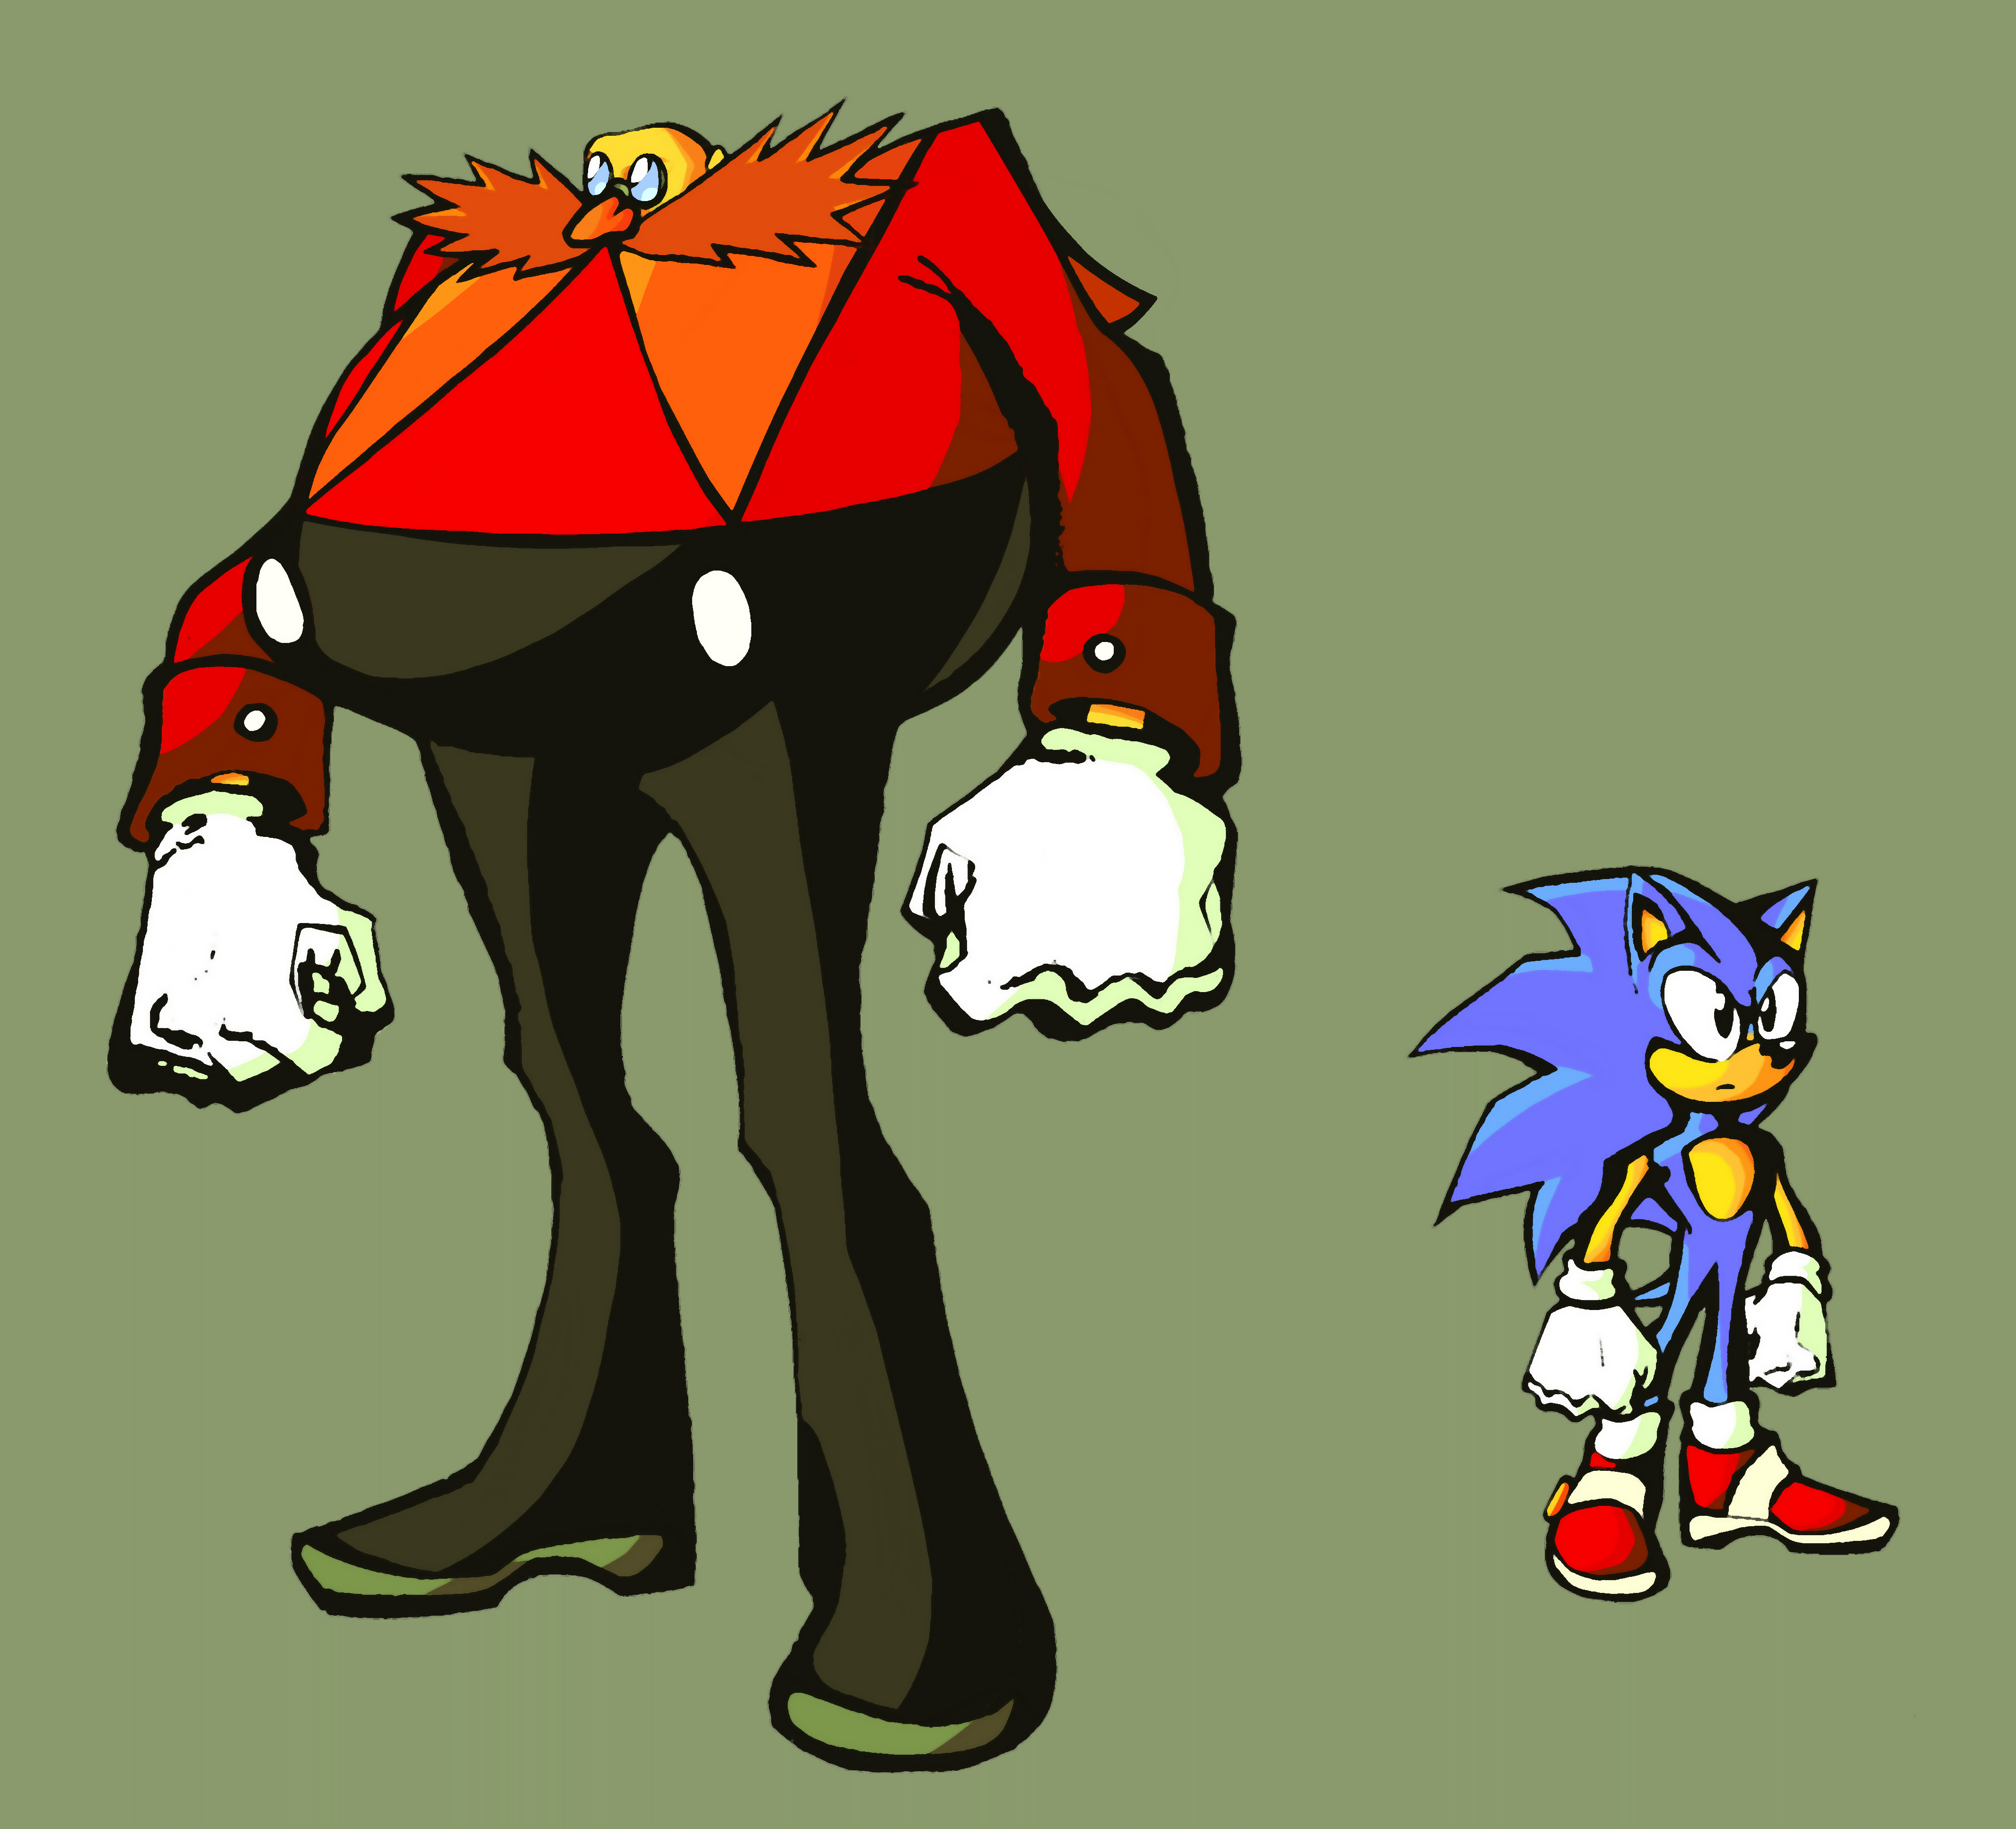 Classic Sonic by Kidd-Kai on DeviantArt